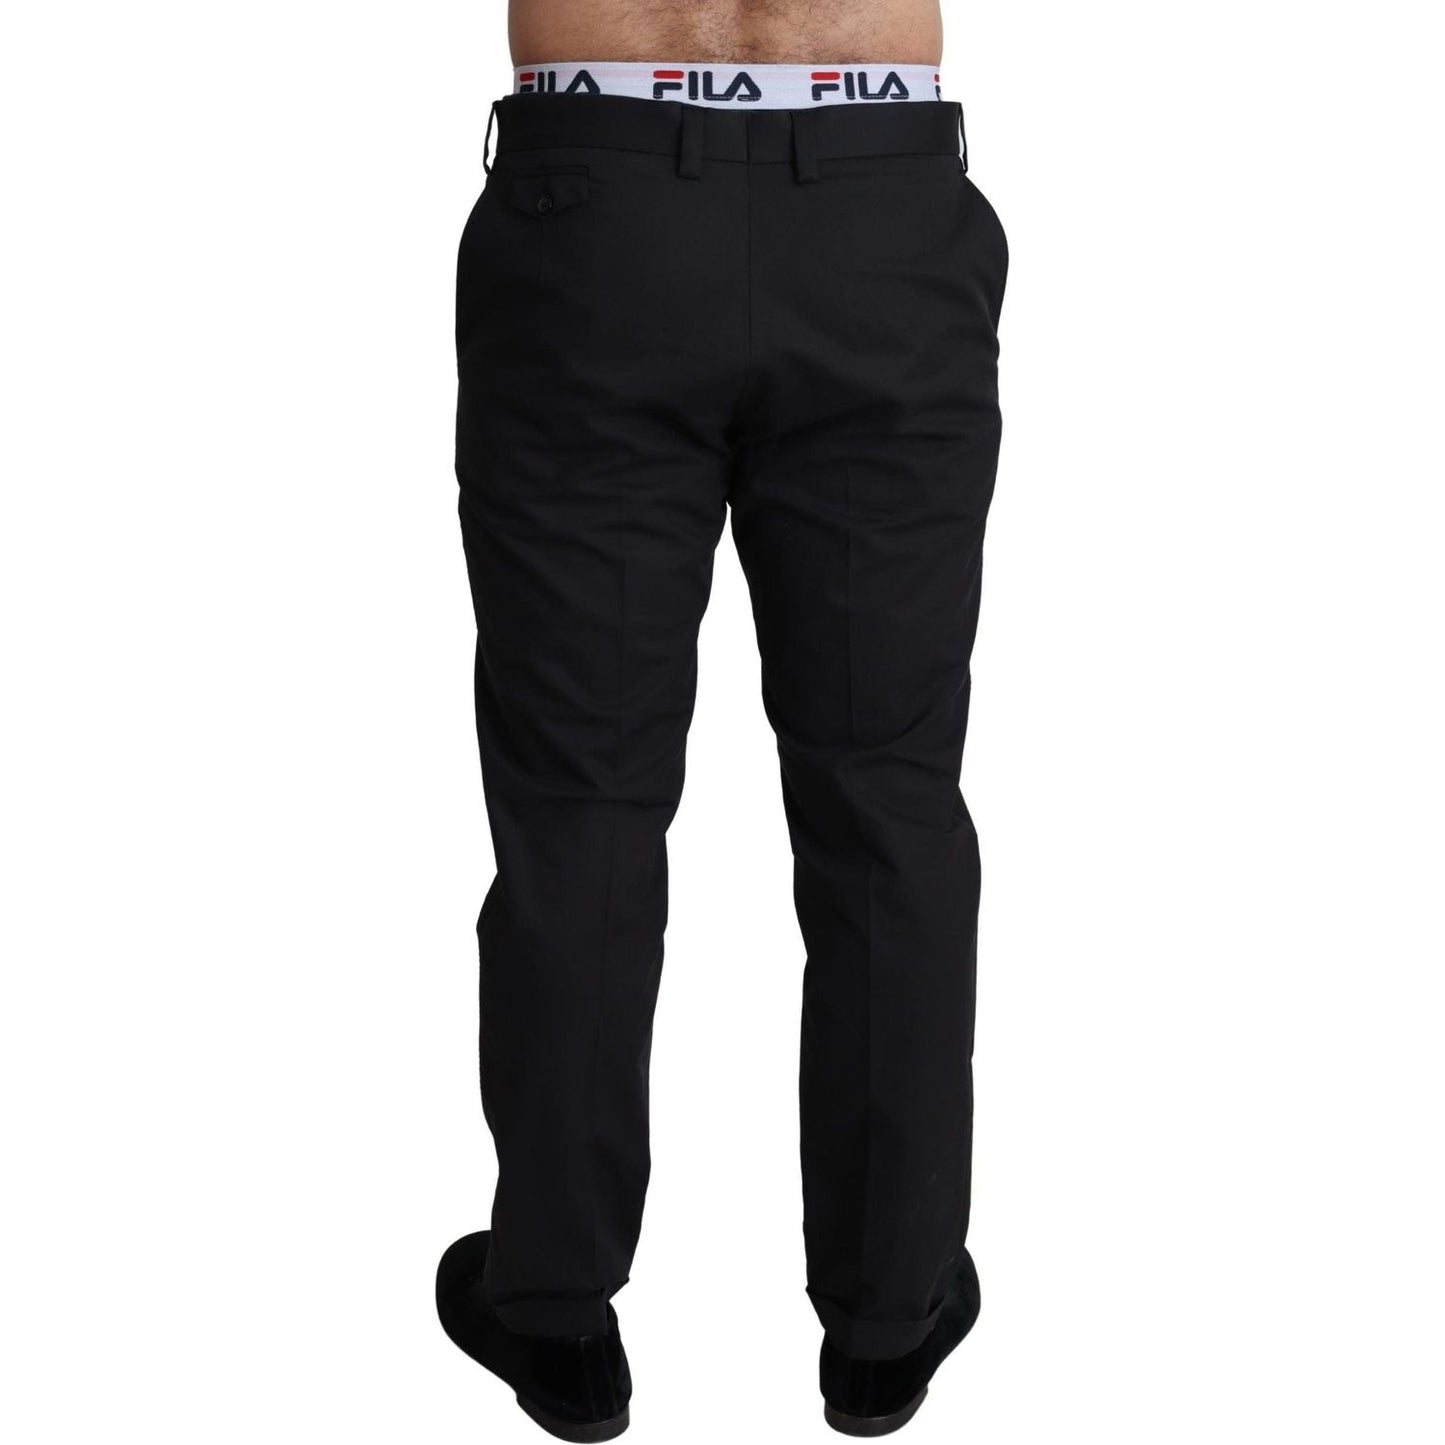 Dolce & Gabbana Elegant Black Stretch Cotton Trousers black-cotton-stretch-dress-formal-trouser-pants IMG_2282-scaled-a5832ea7-06a.jpg